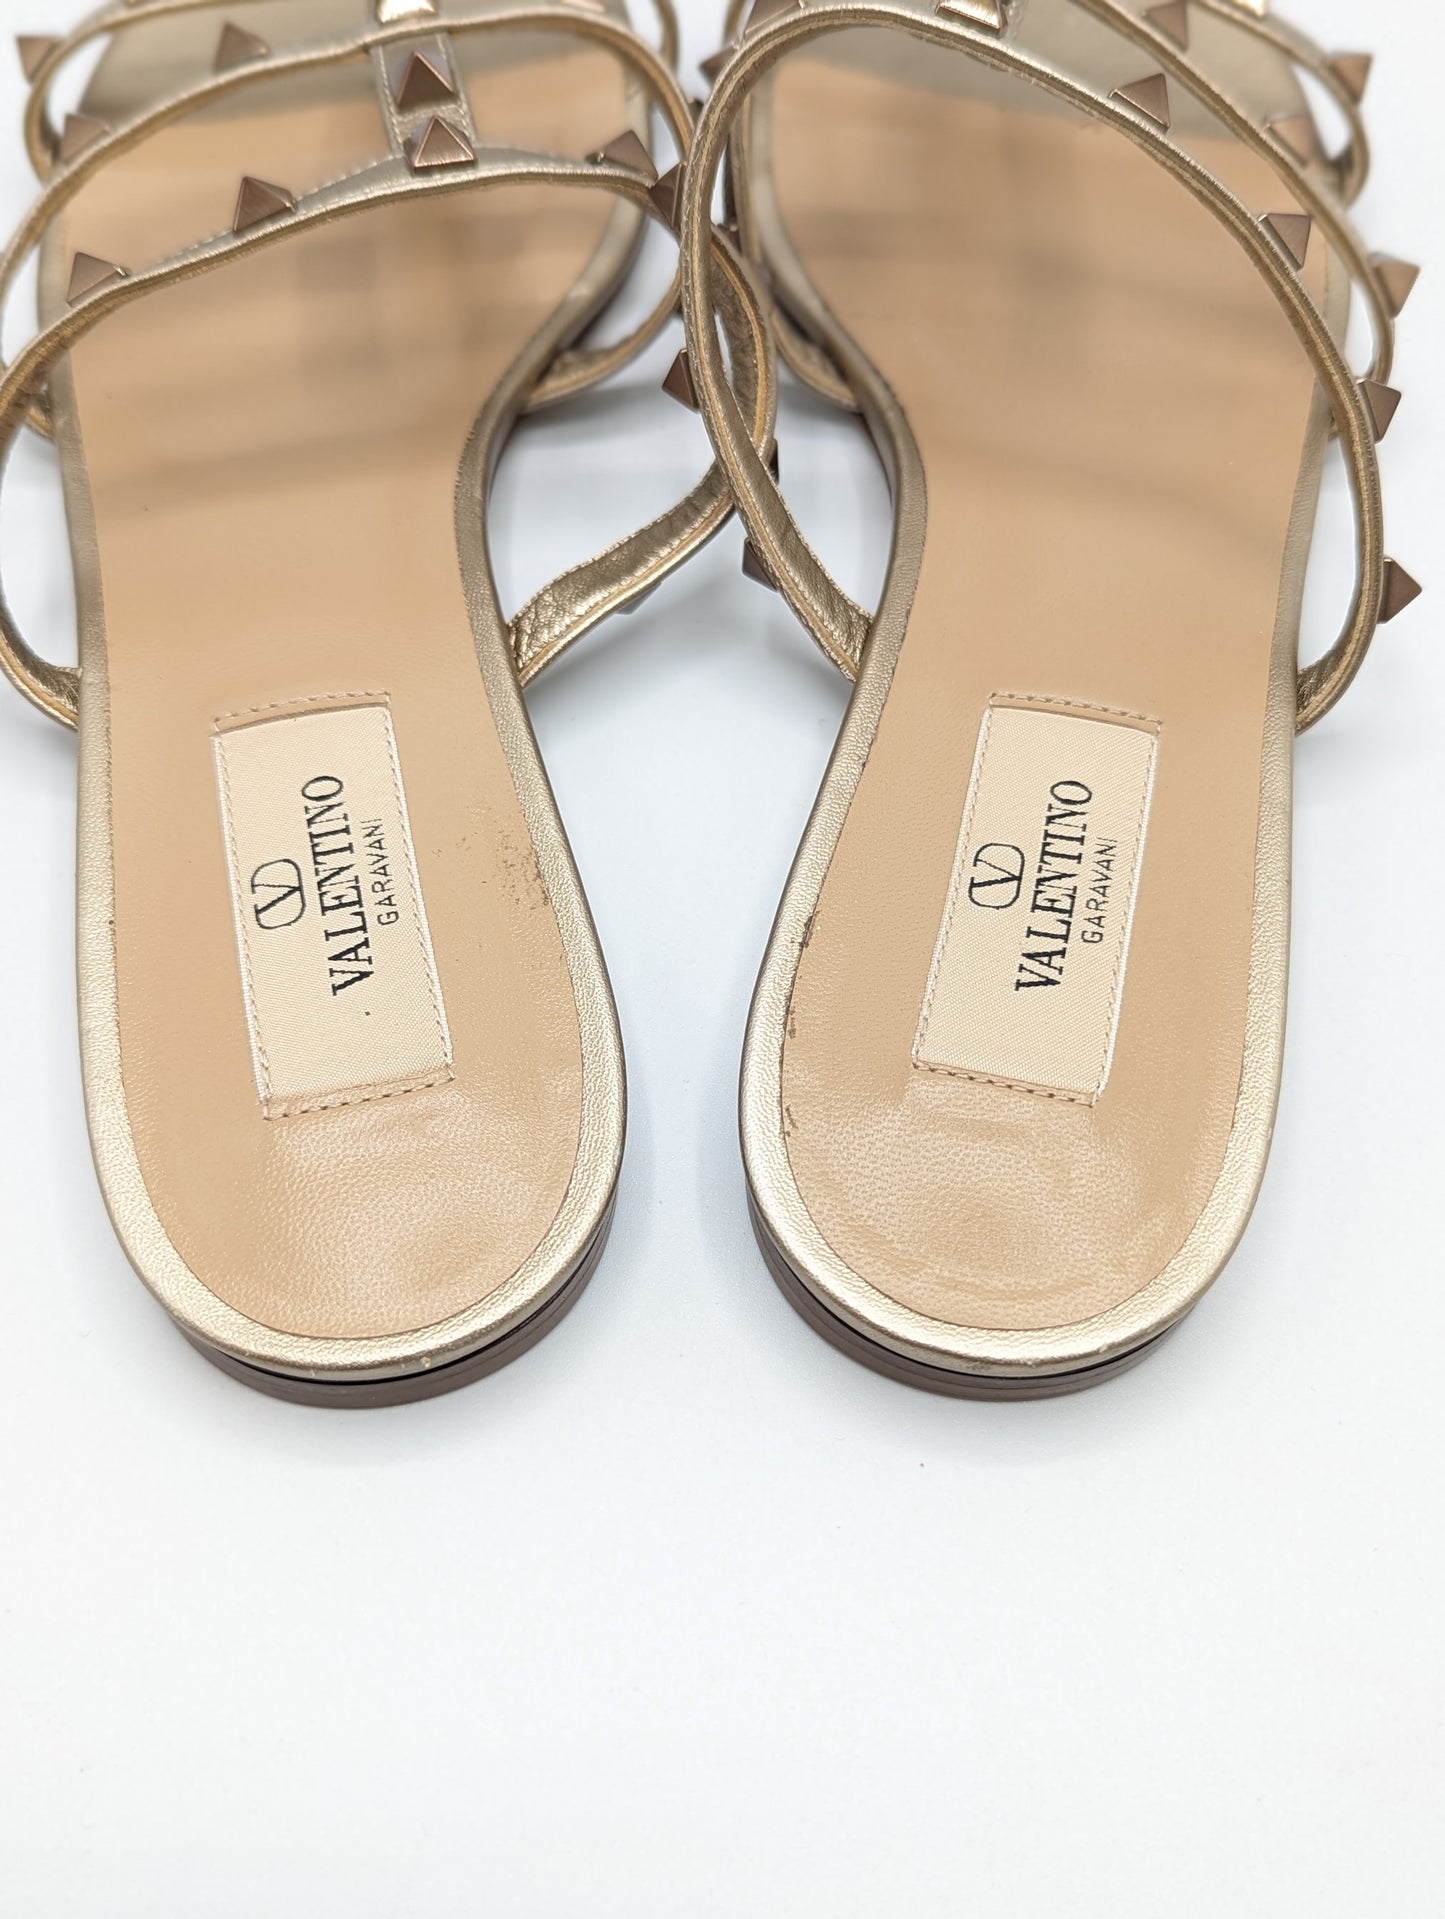 Valentino Garavani Gold Rockstud Slide Sandals Size 38.5